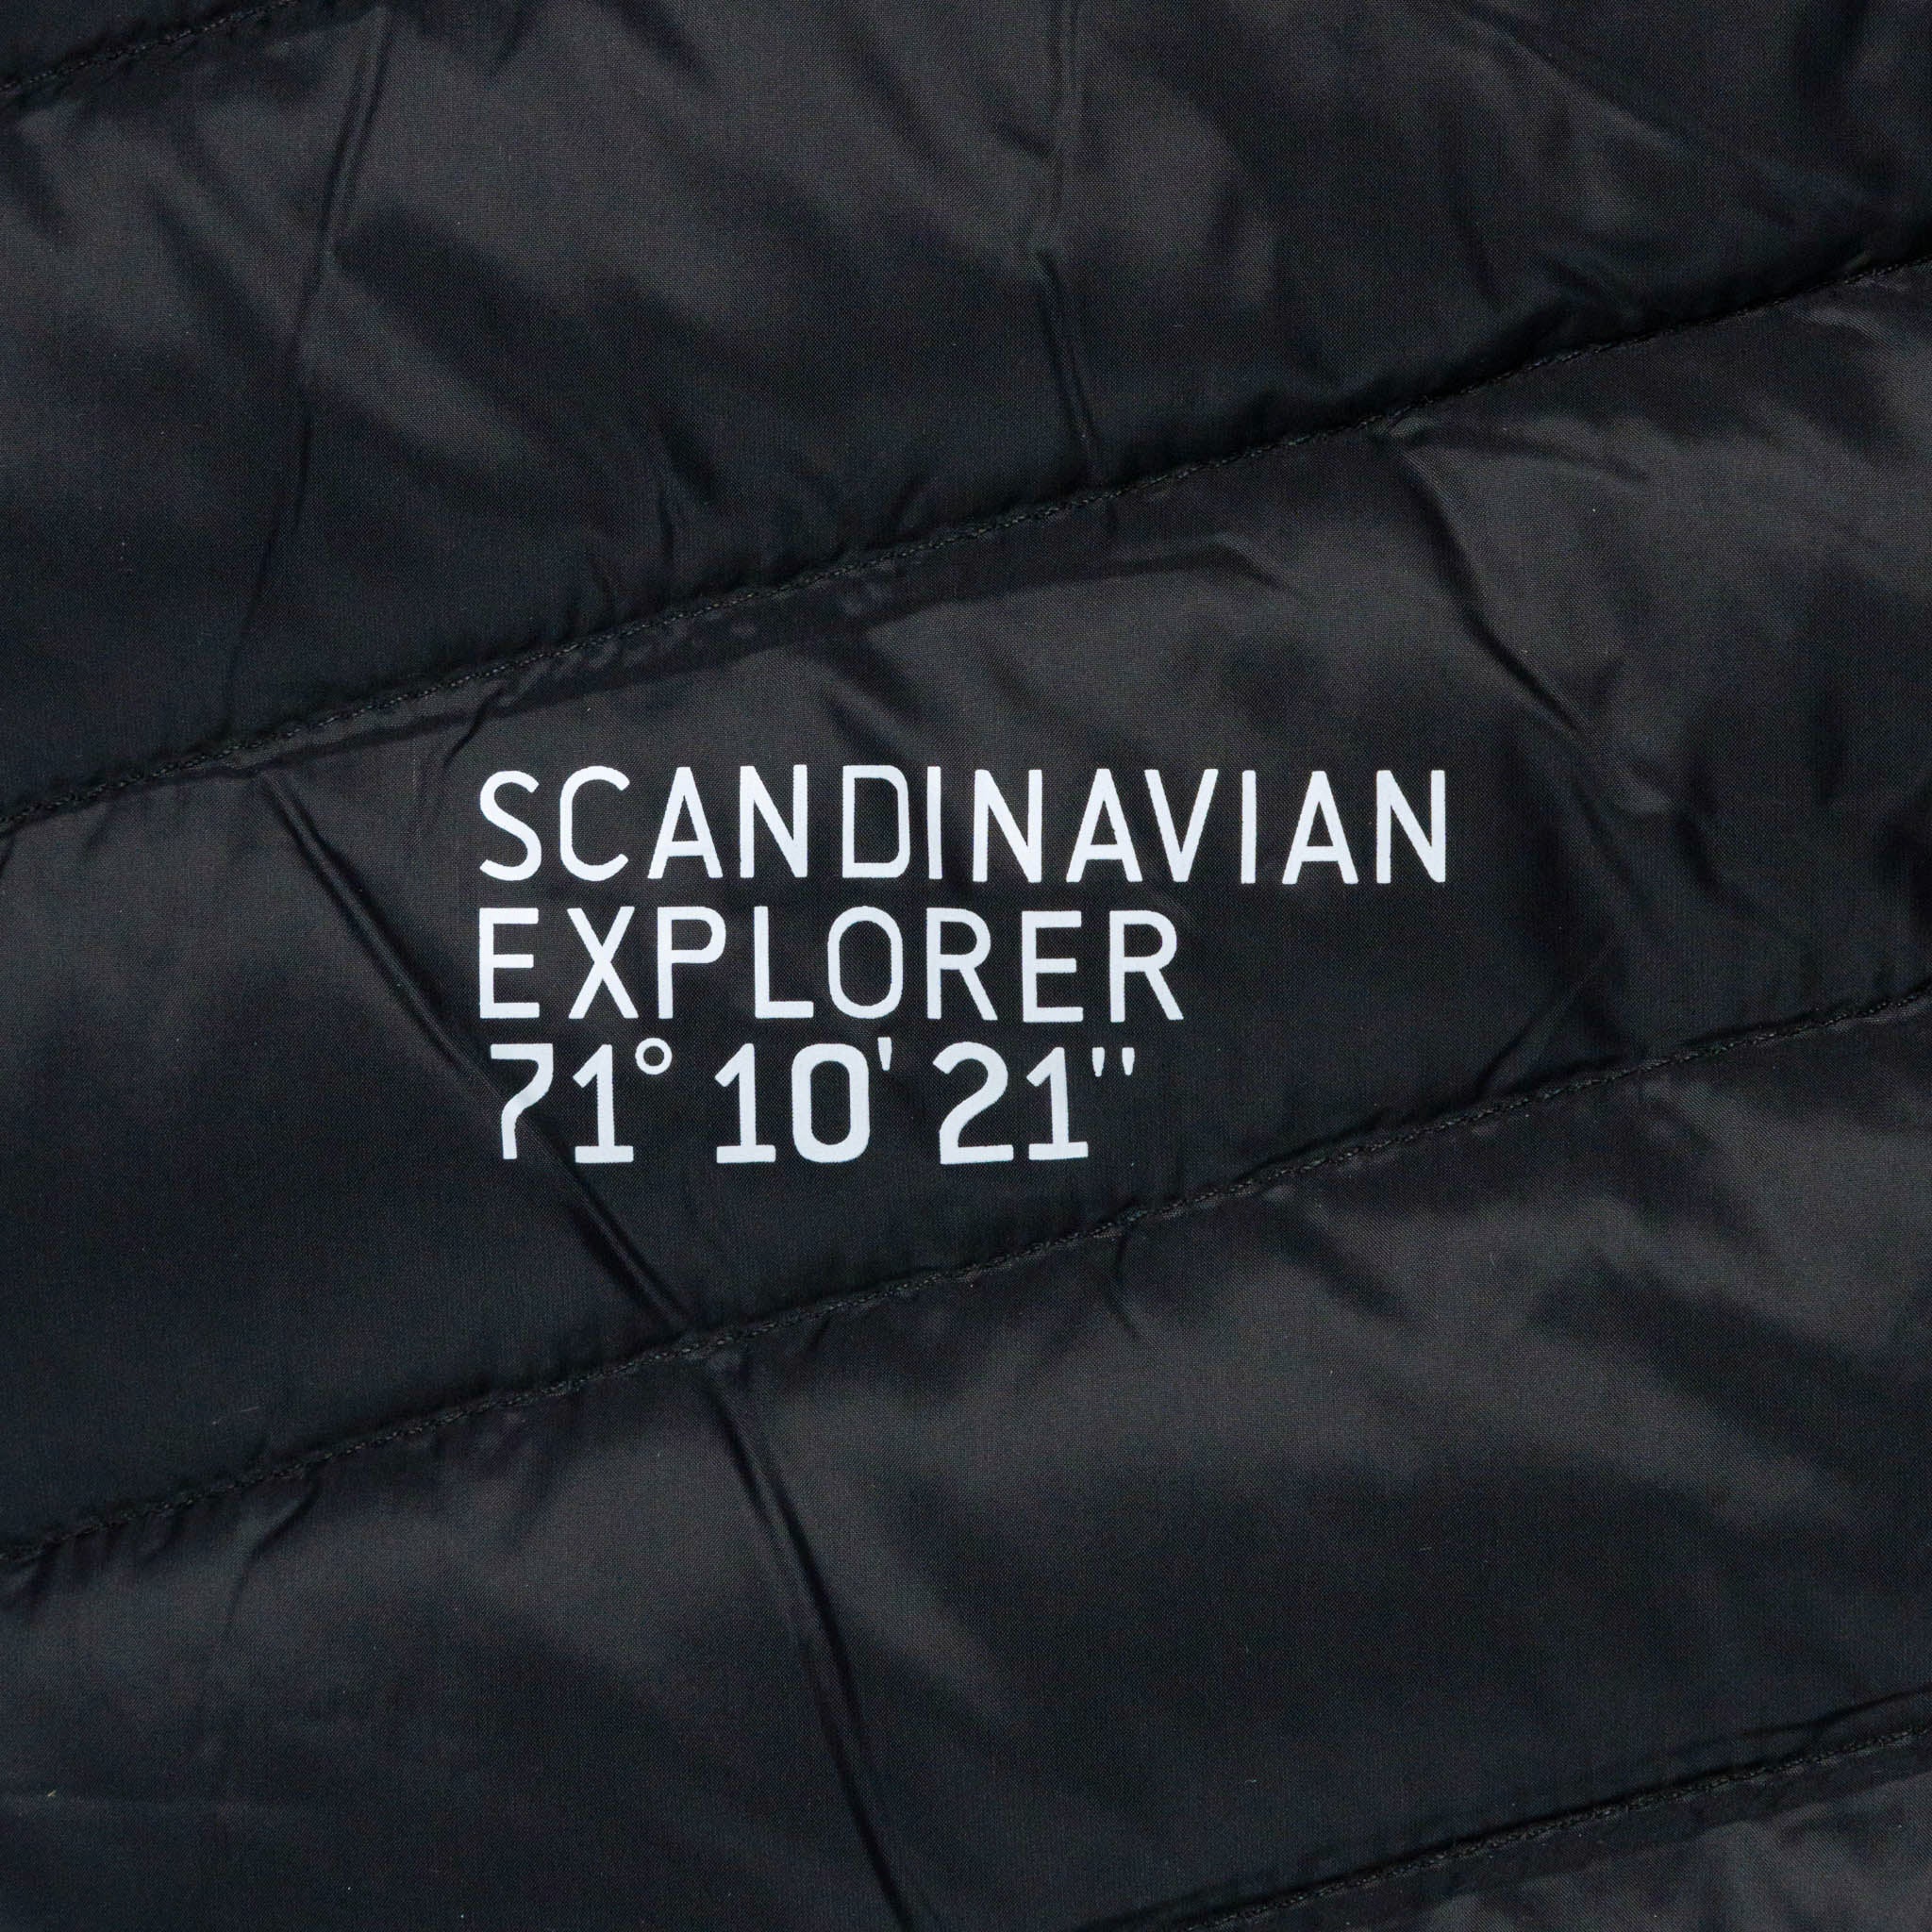 Ladies Down 3/4 Length Coat by Scandinavian Explorer